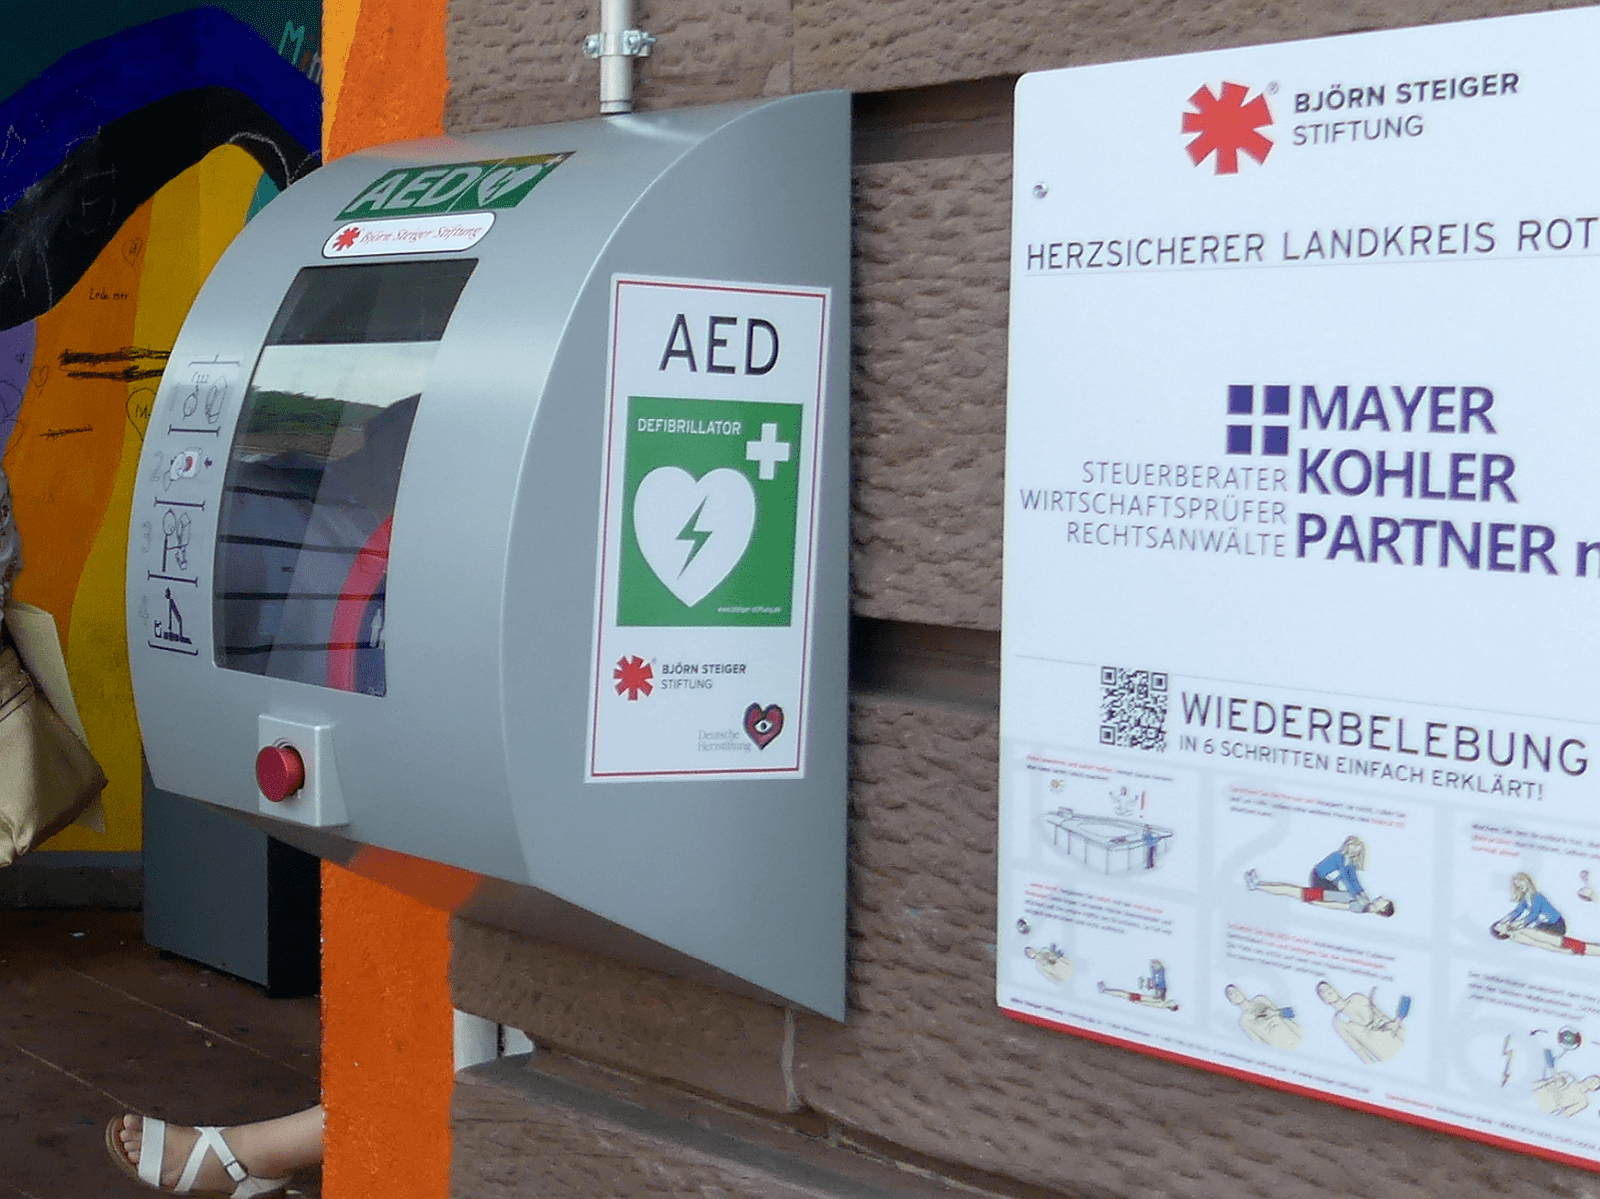 defibrillator mayer kohler paradiesplatz dk 180724 (7)